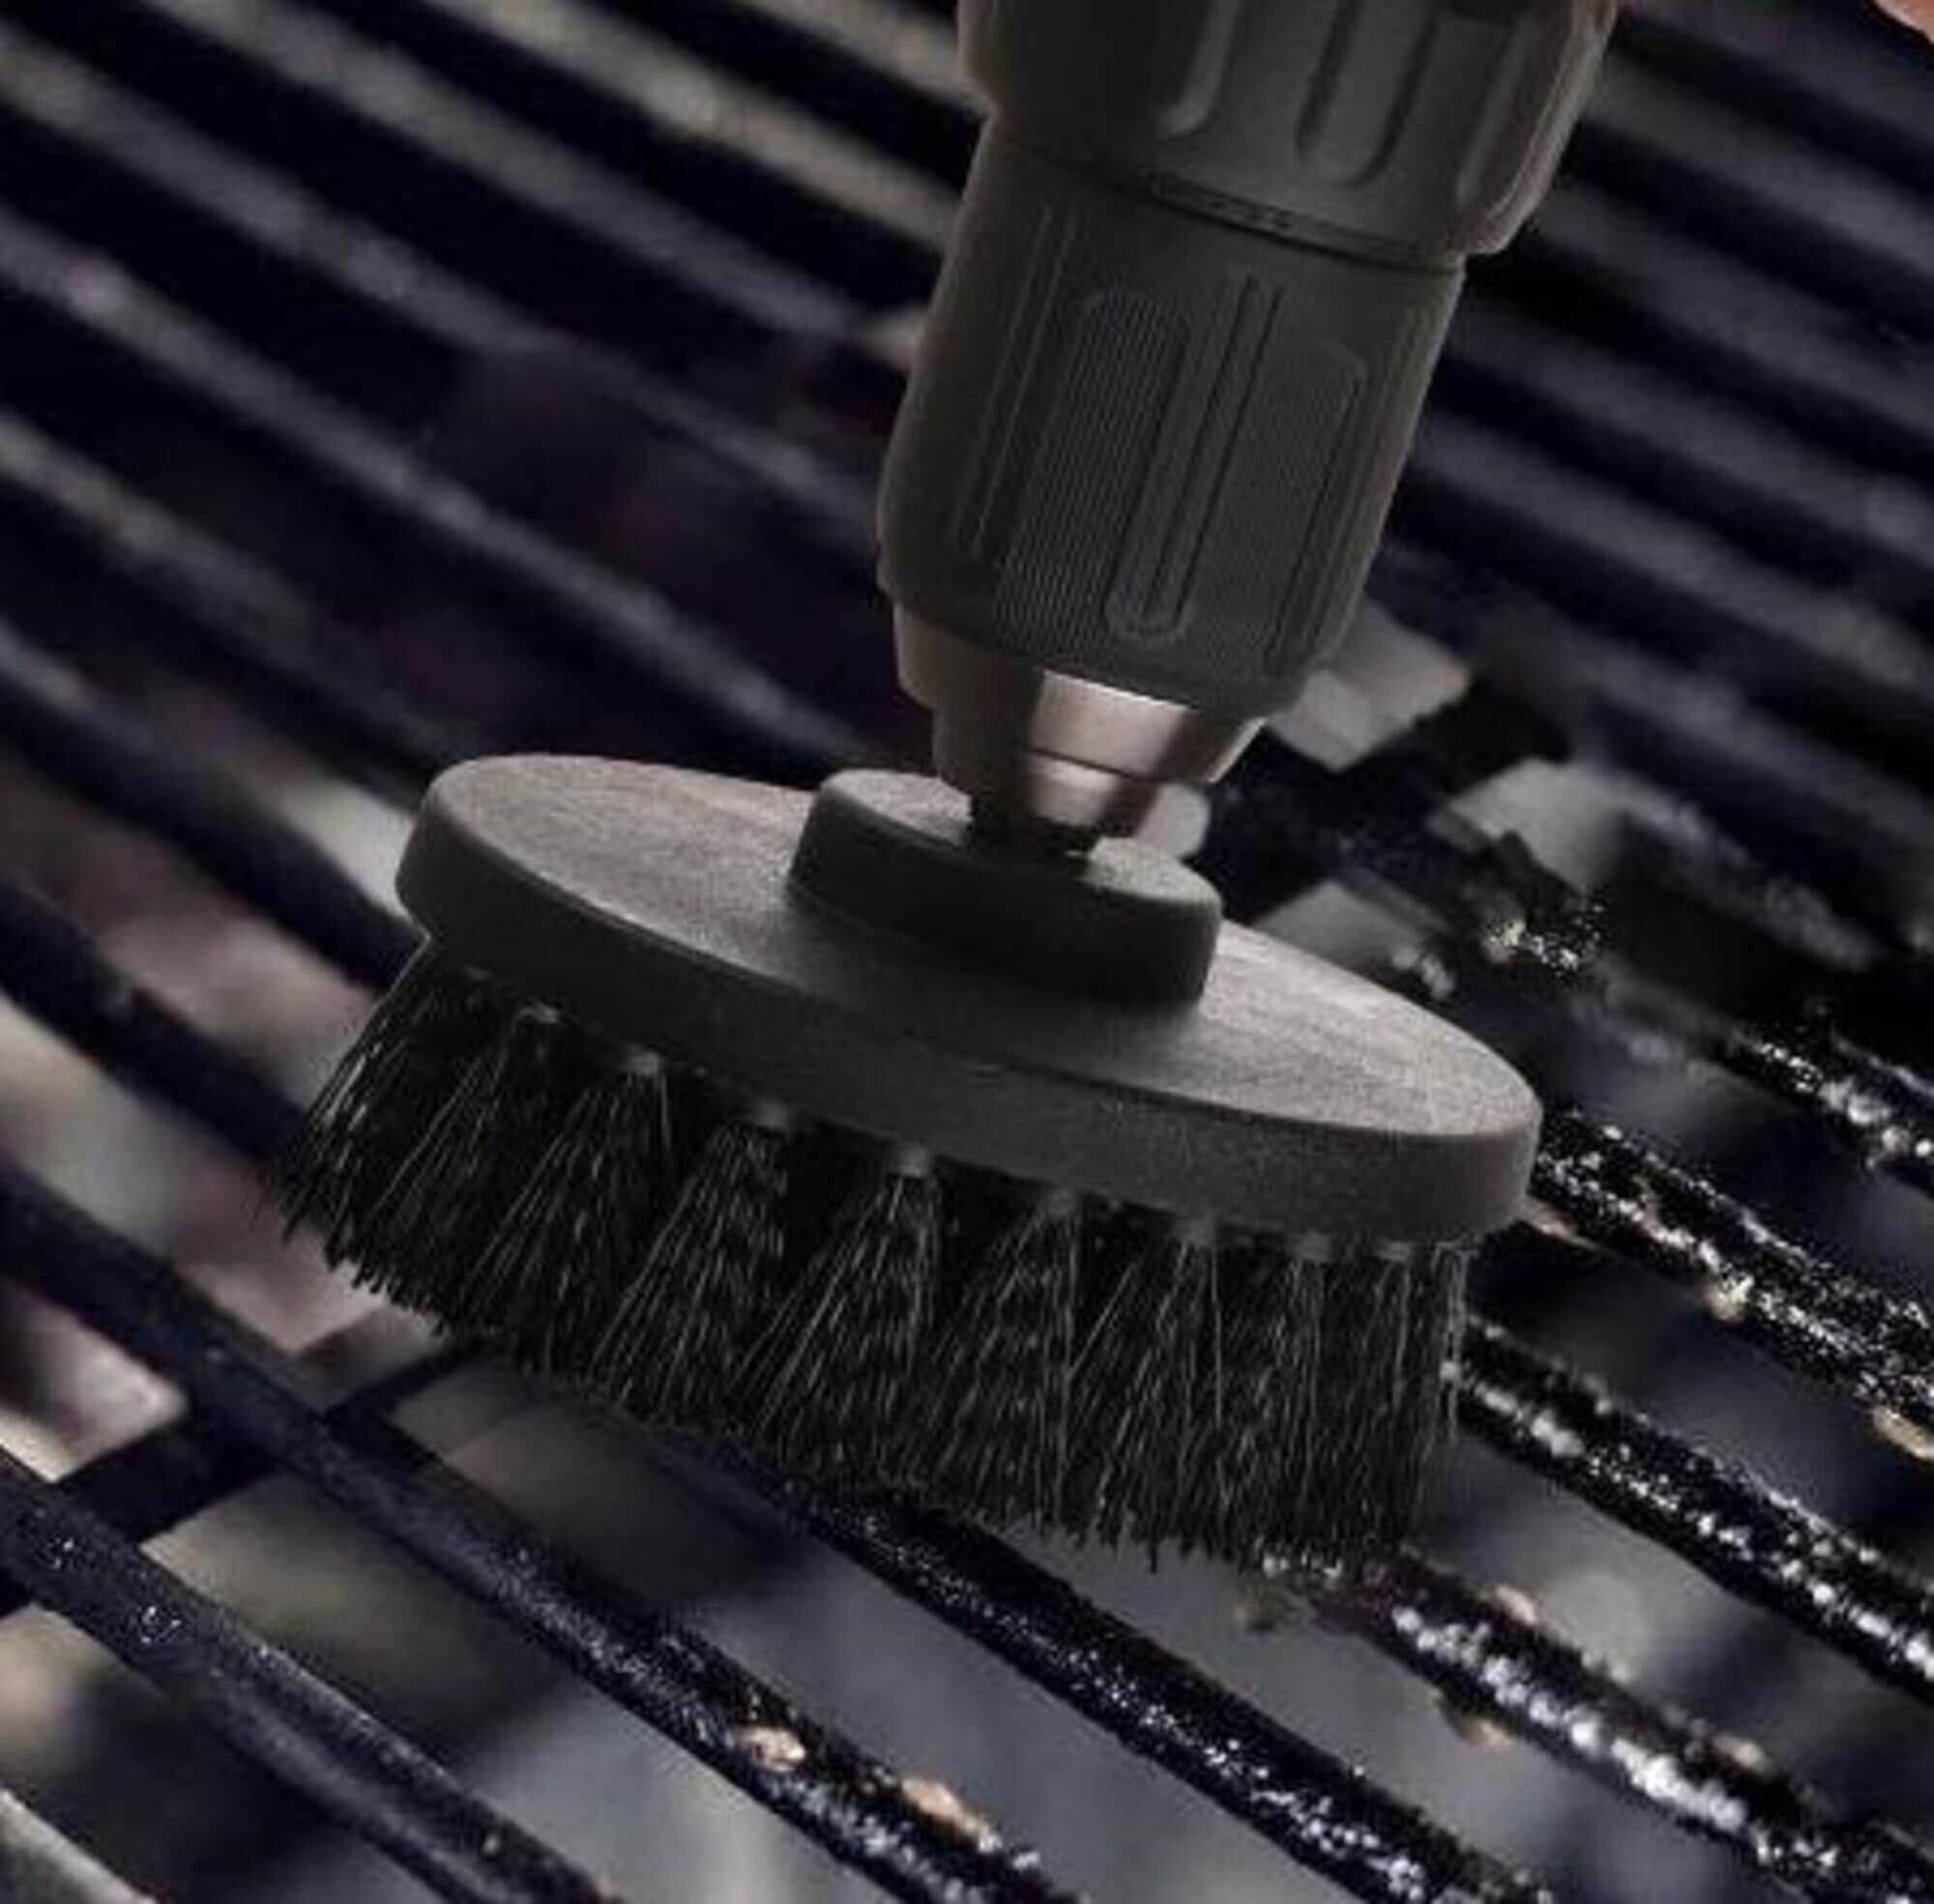 YIHATA 28PCS Drill Brush Cleaning Brushes Set, Power Scrubber